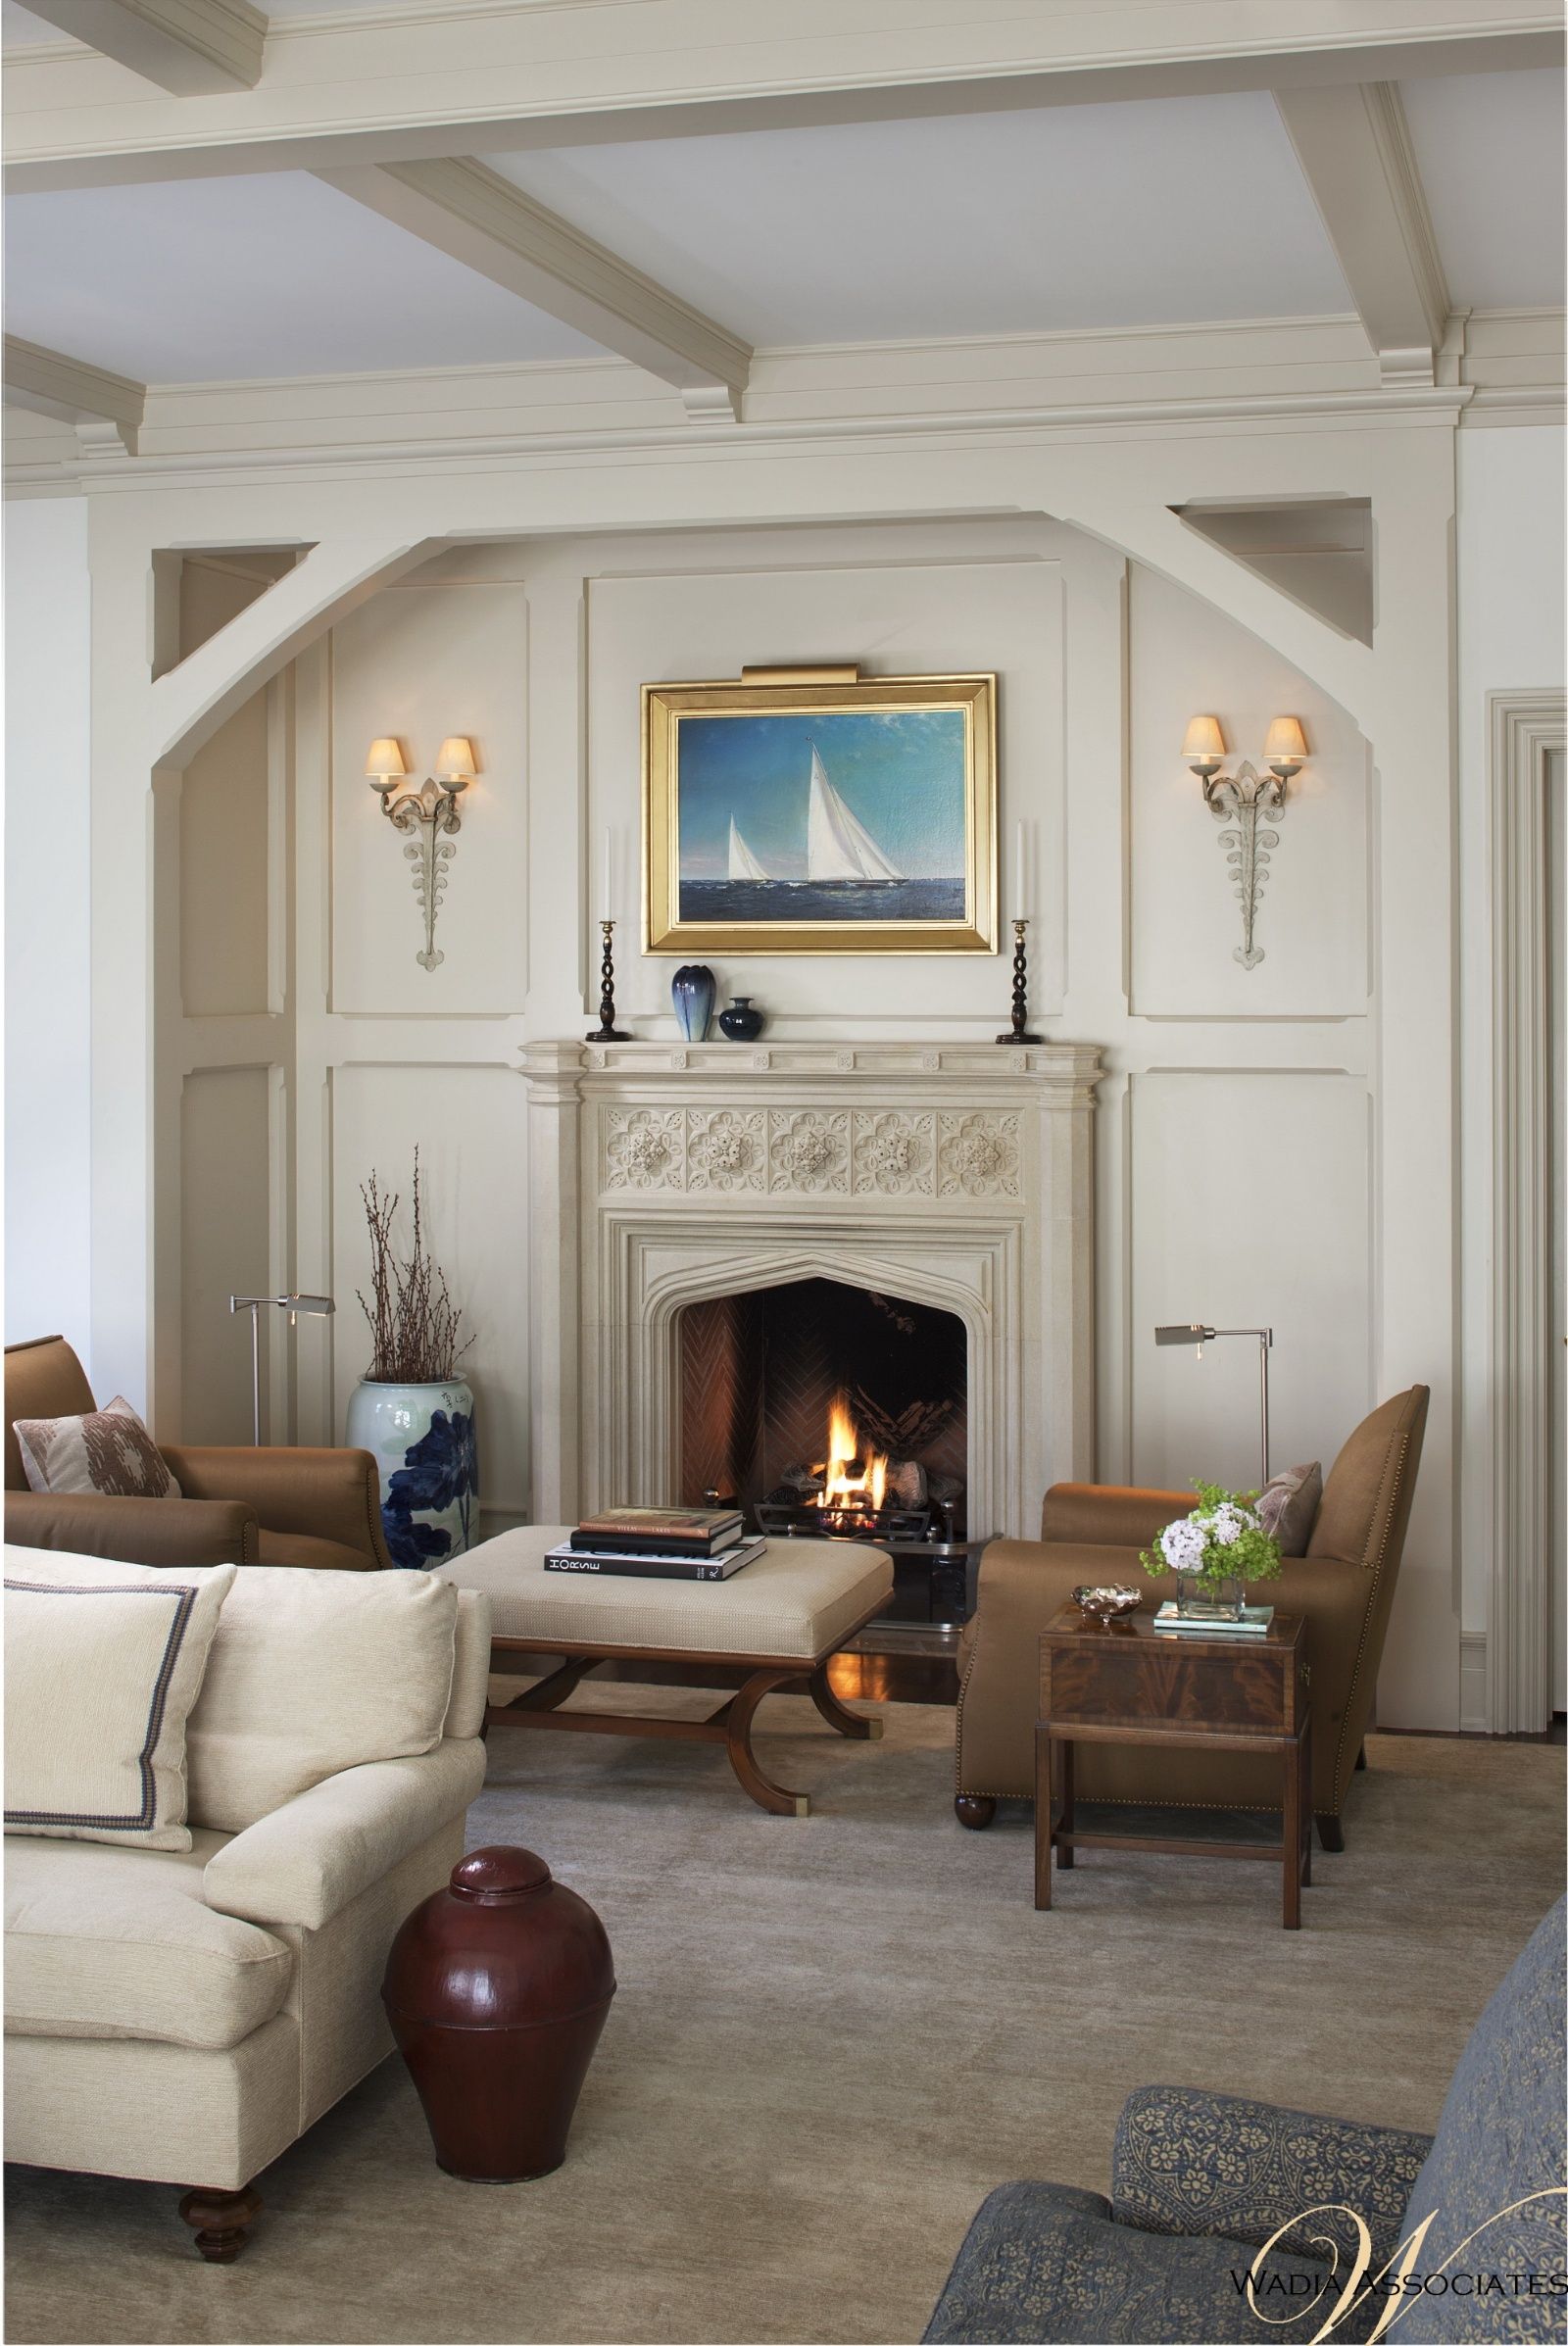 Apartment Fireplace Elegant 65 Inspiring Fireplace Ideas to Keep You Warm